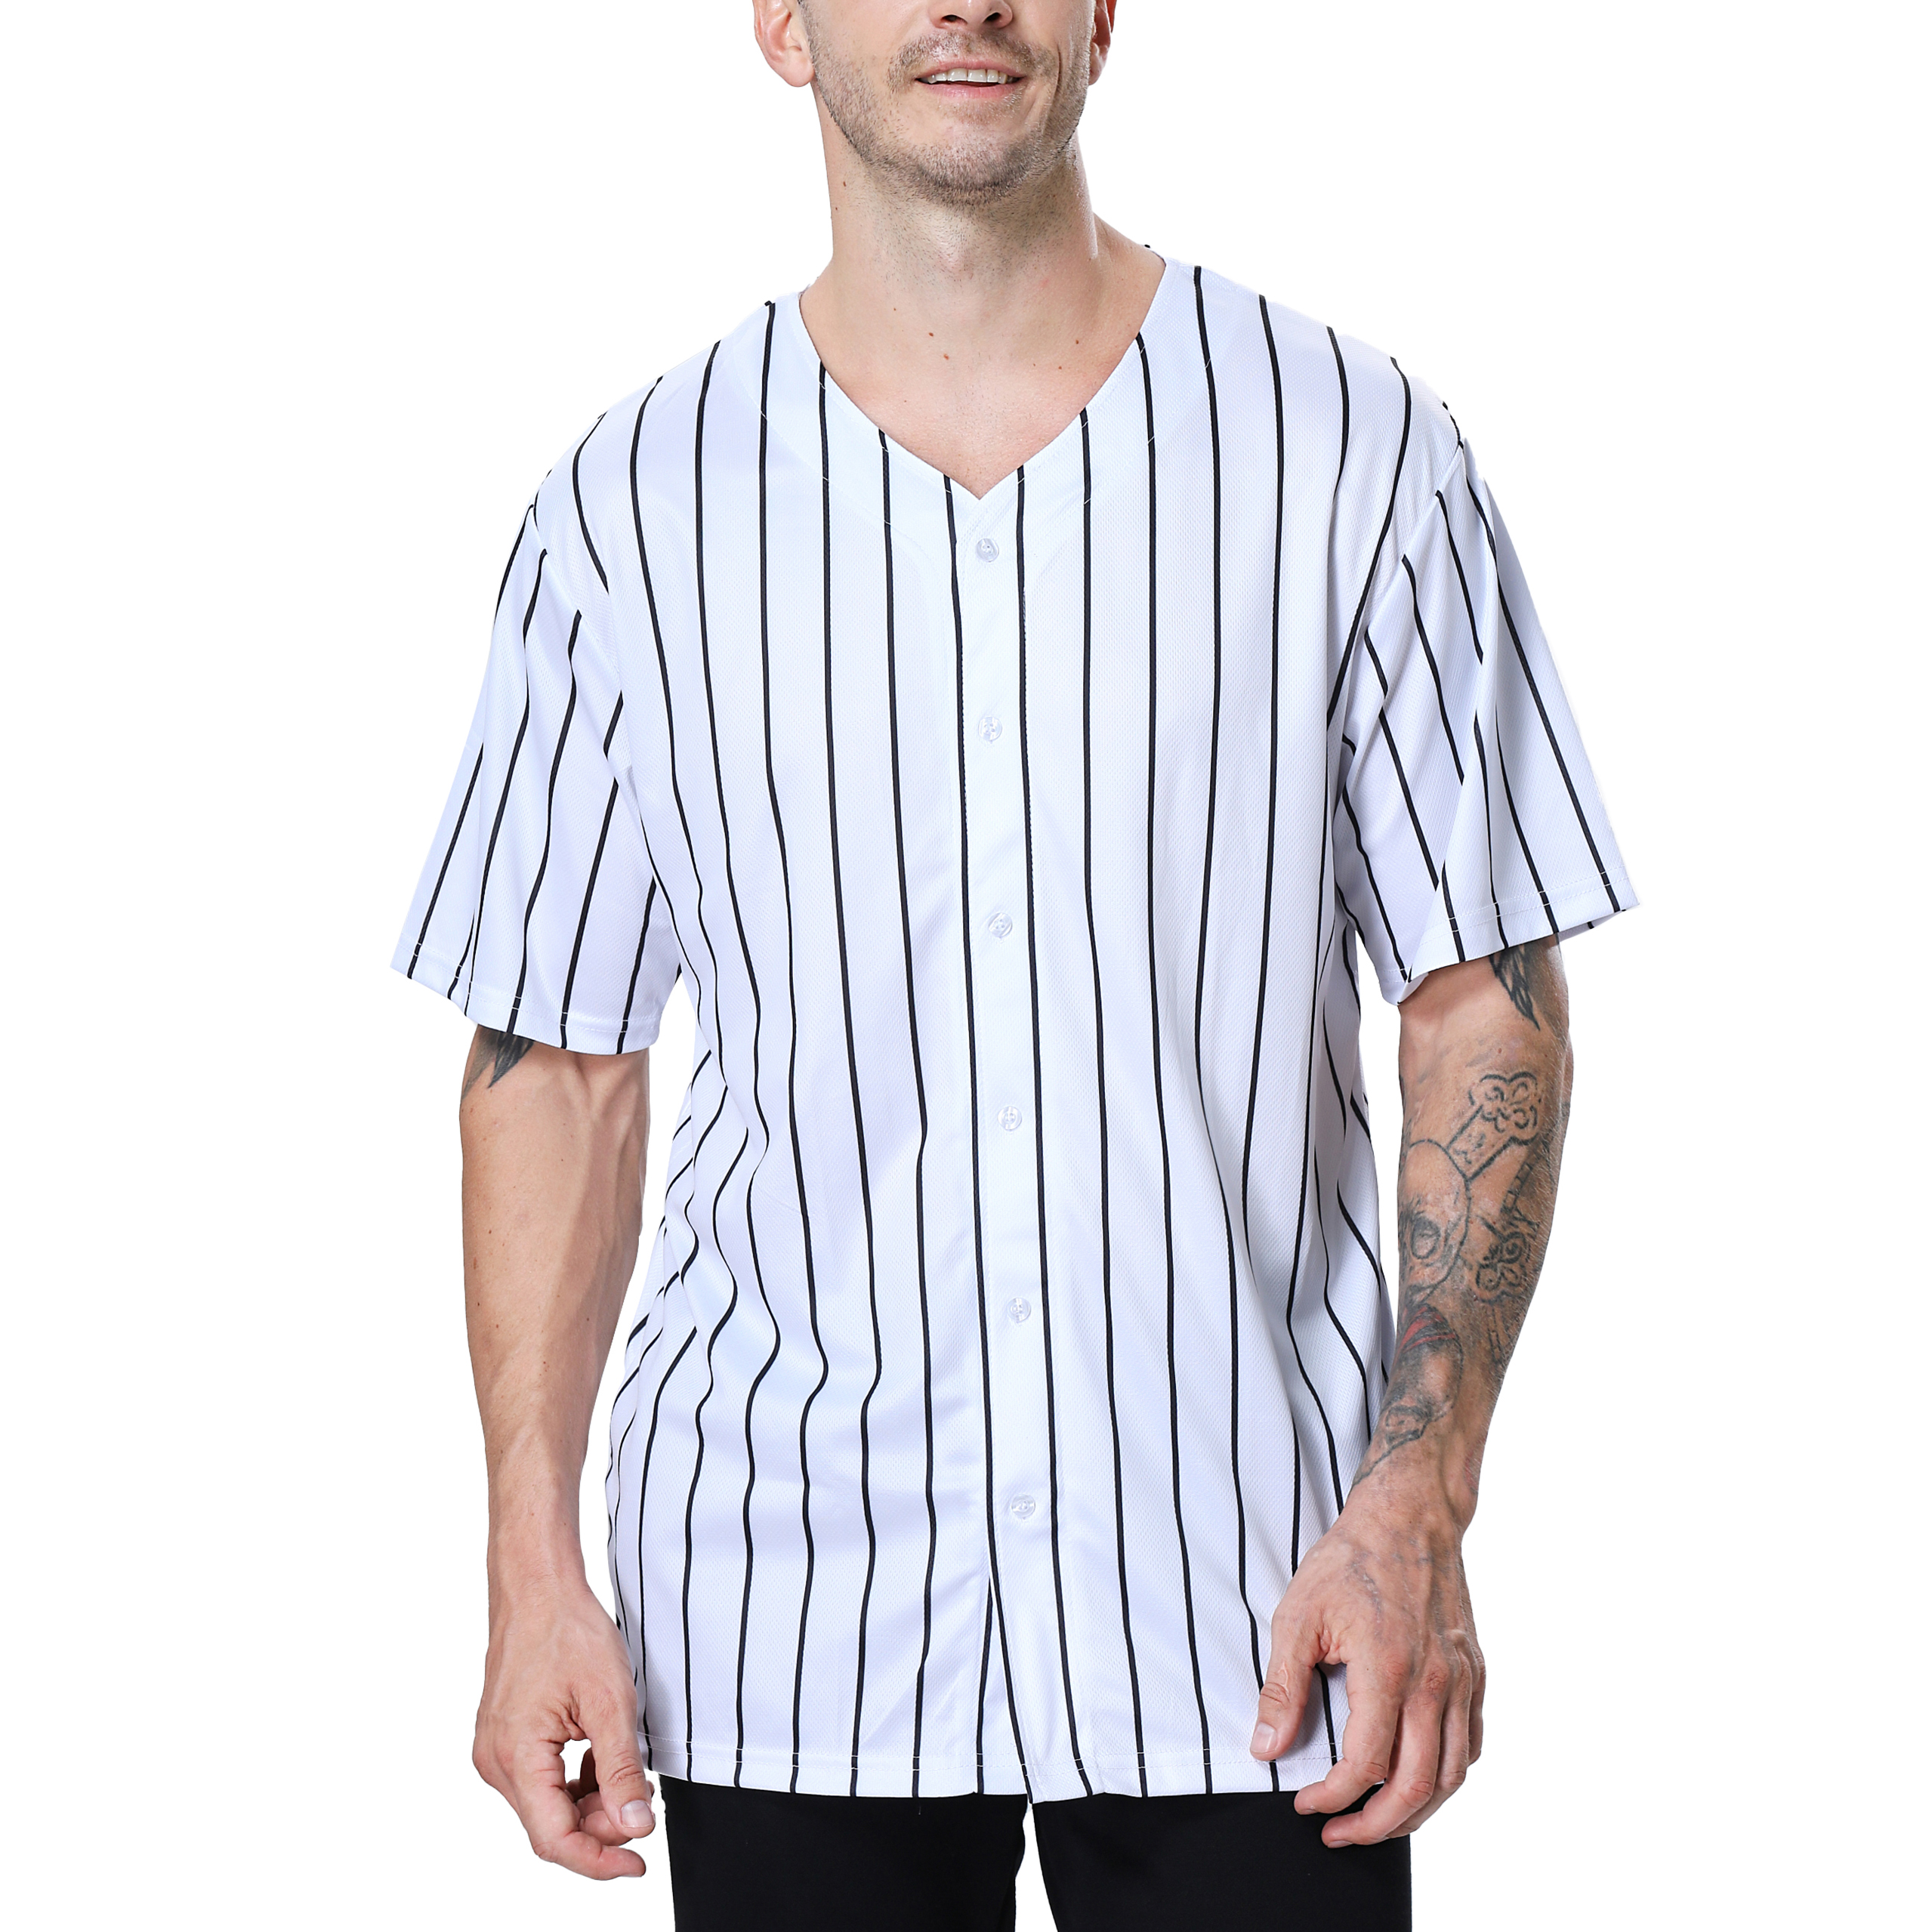 TOPTIE Sportswear Pinstripe Baseball Jersey for Men and Boy, Button Down  Jersey Sale, Reviews. - Opentip